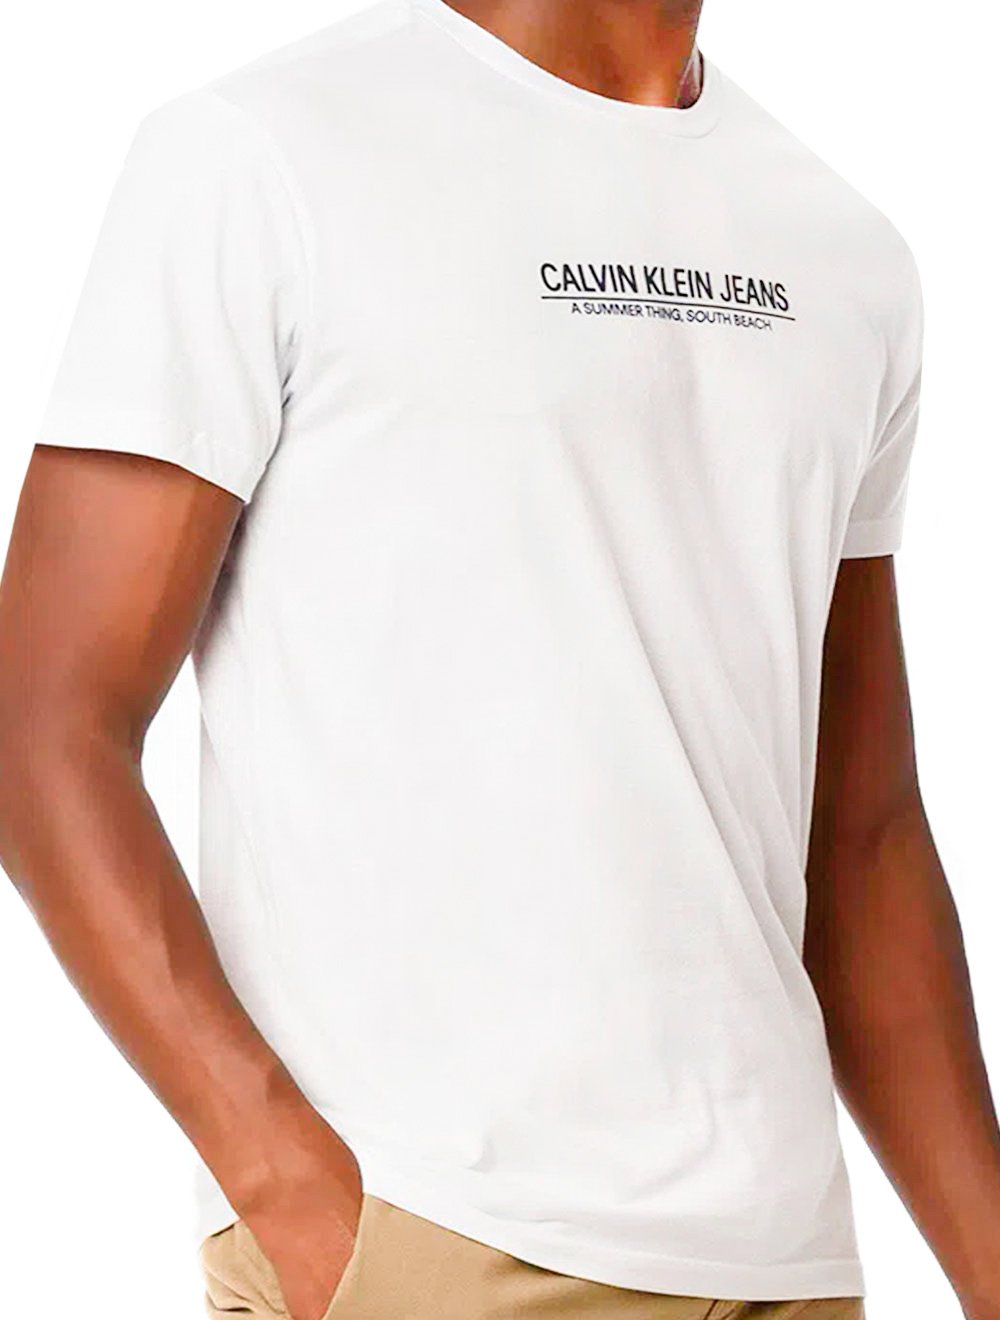 Camiseta Calvin Klein Jeans Masculina New Logo Summer Thing Branca